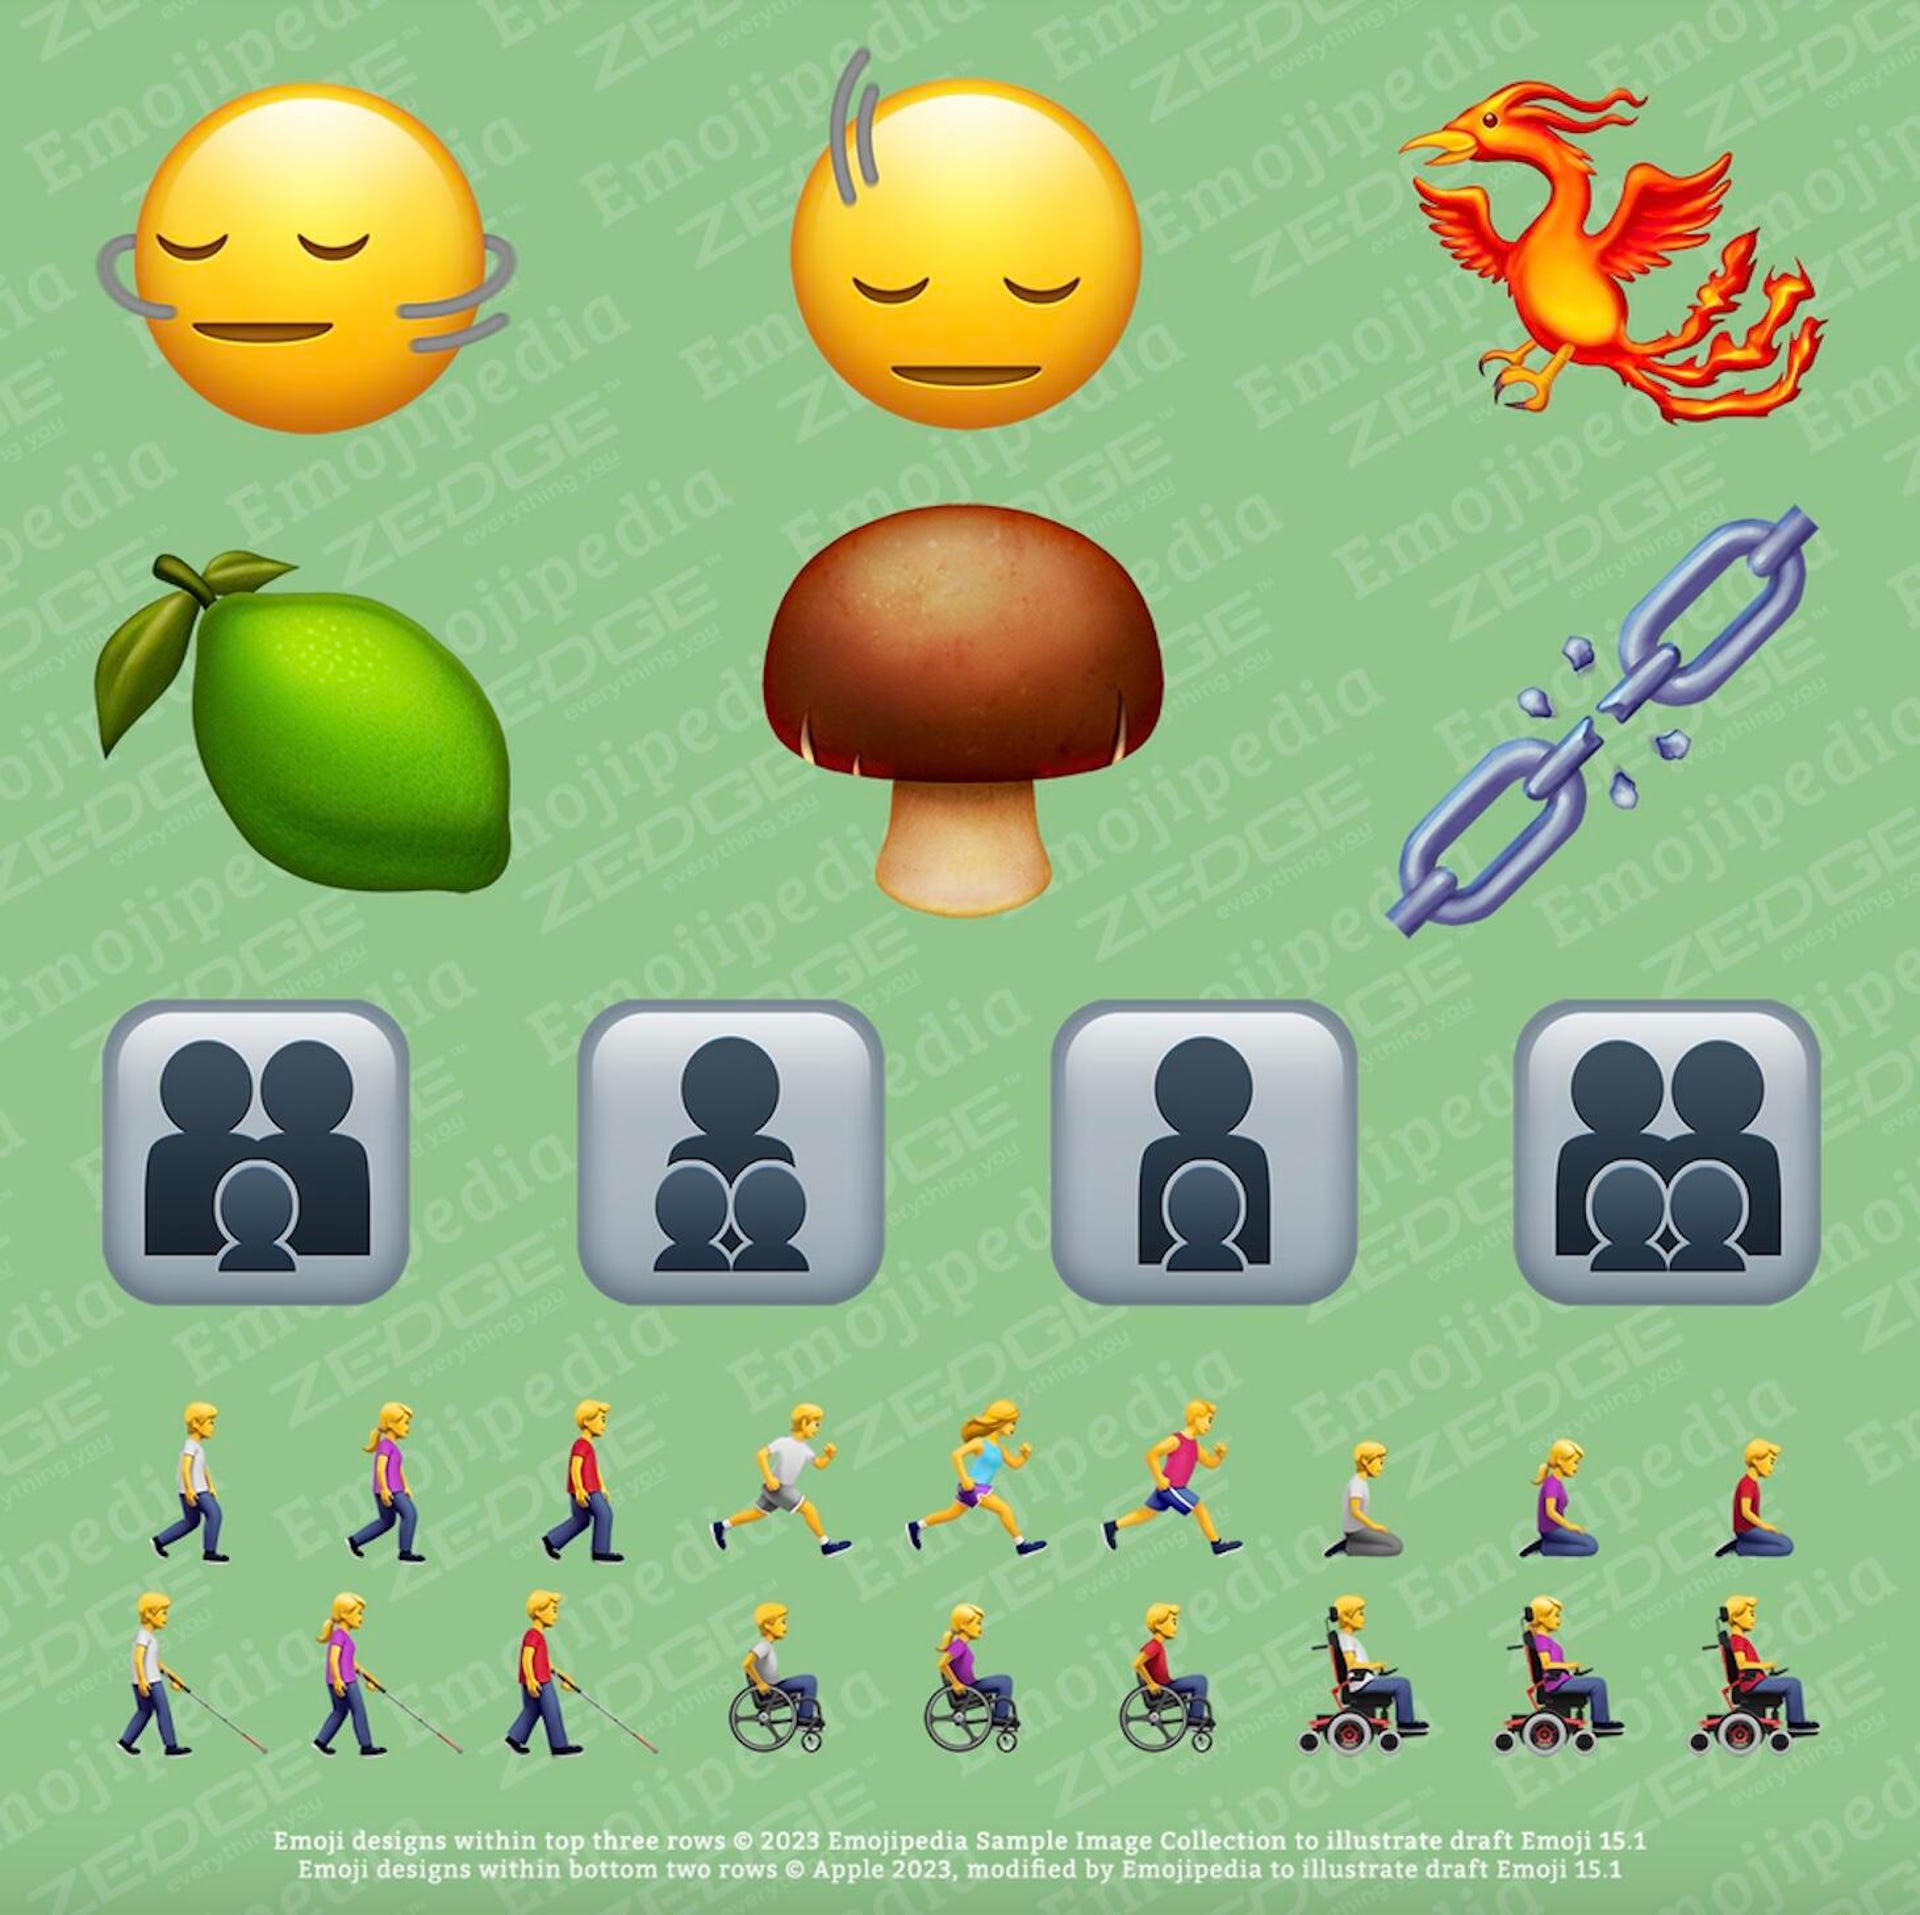 new emojis on green background